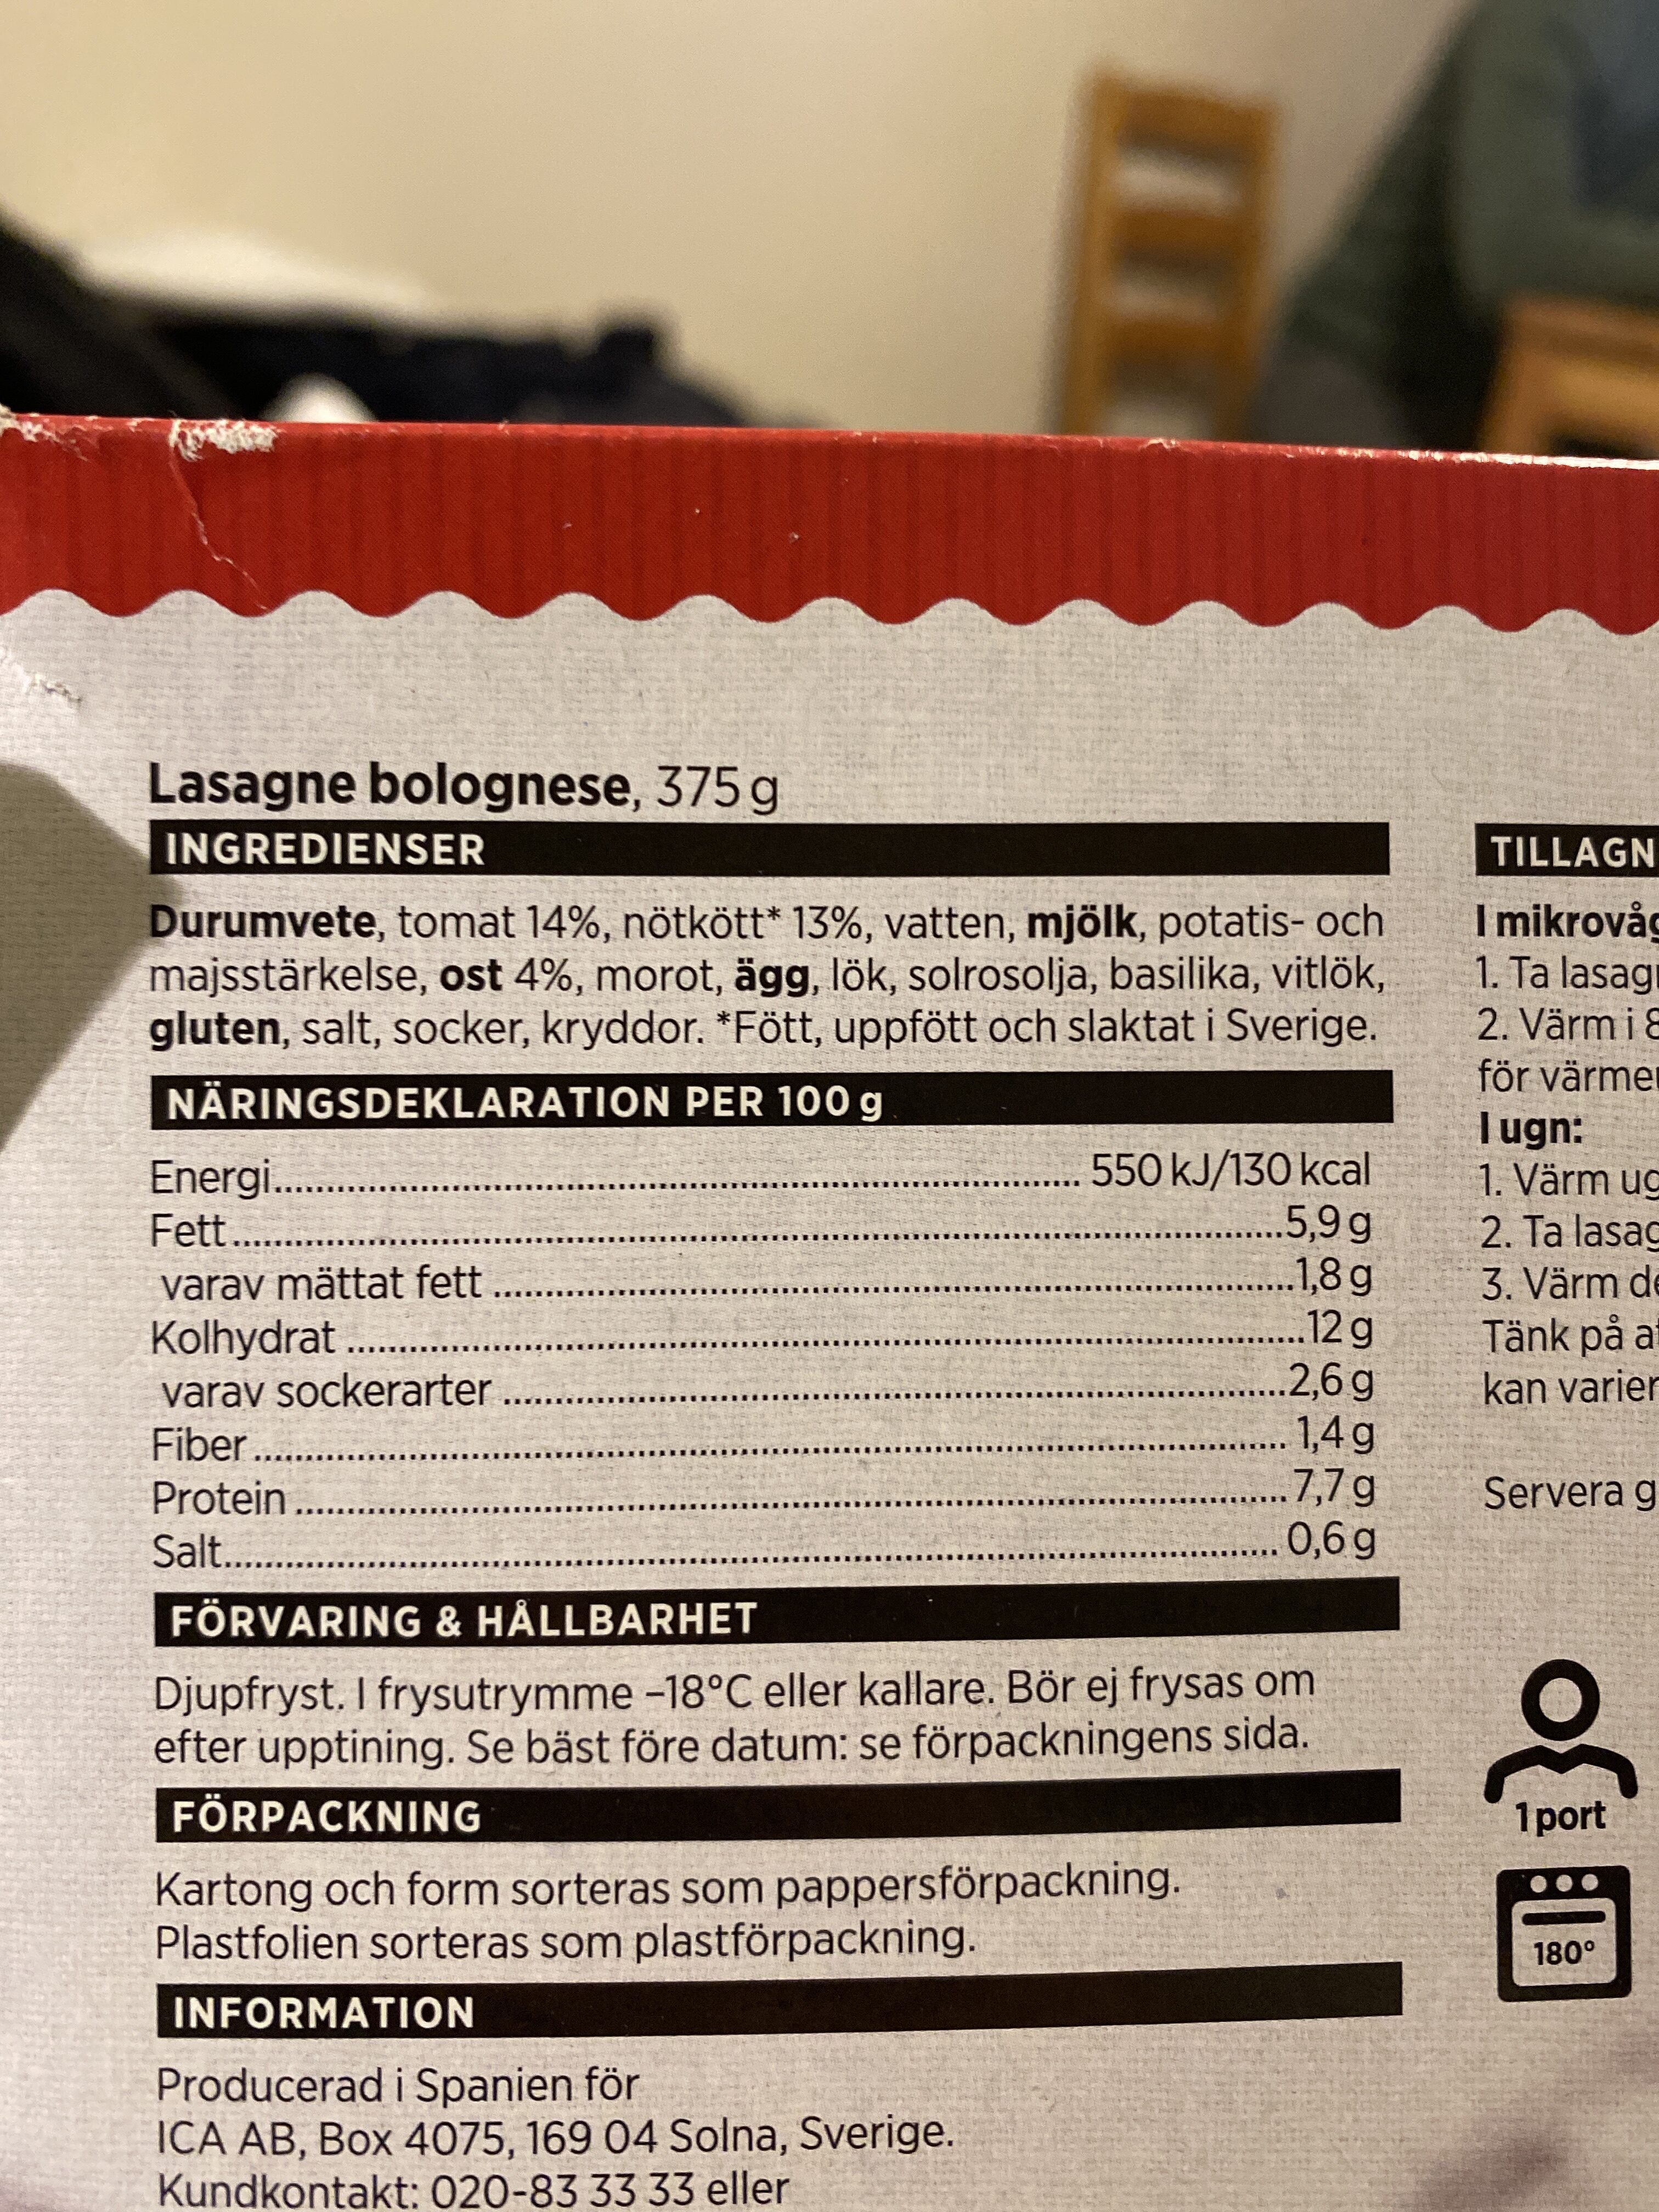 Lasagne Bolognese - Näringsfakta